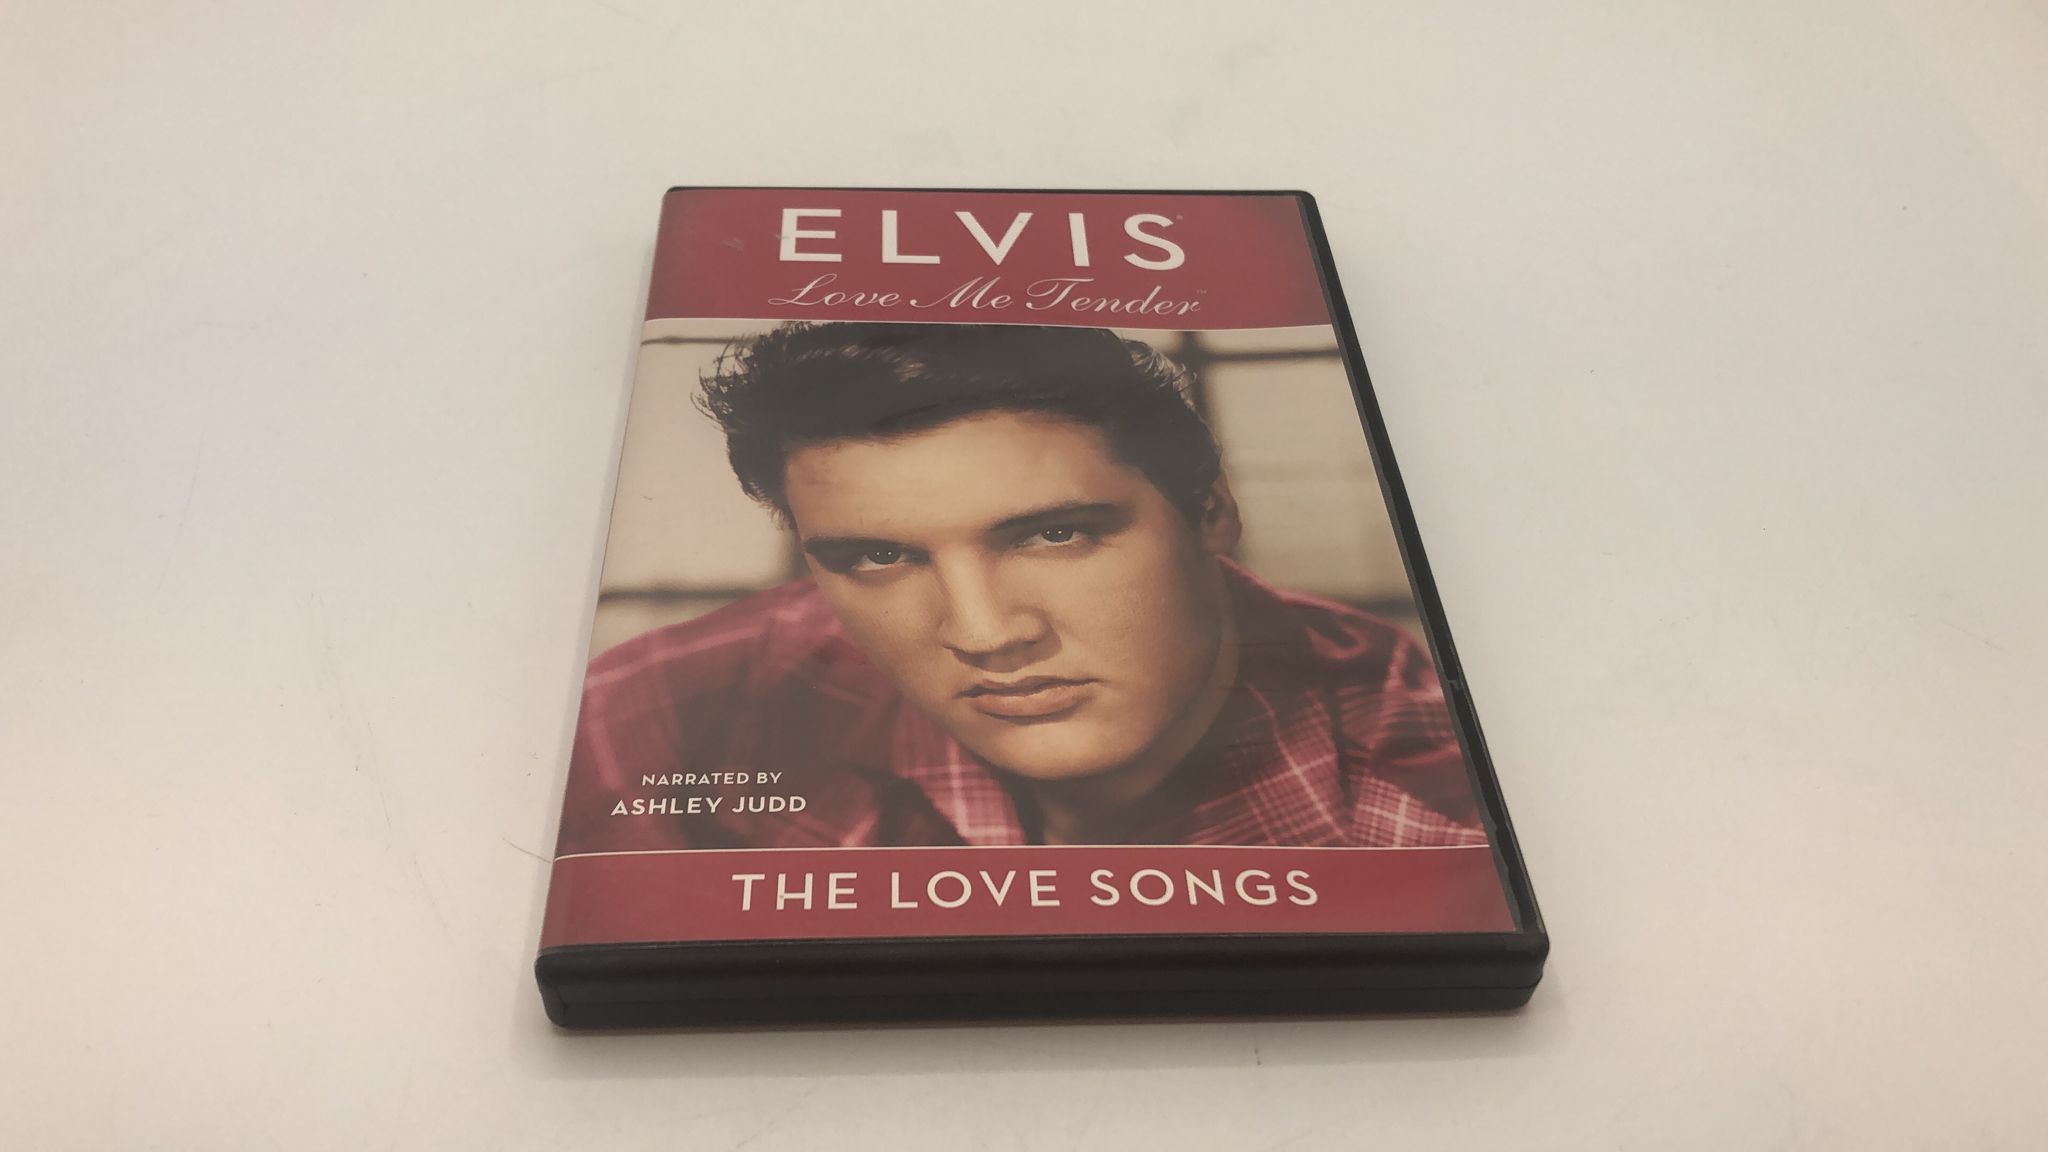 Dvd Storia di Elvis "Love me tender"